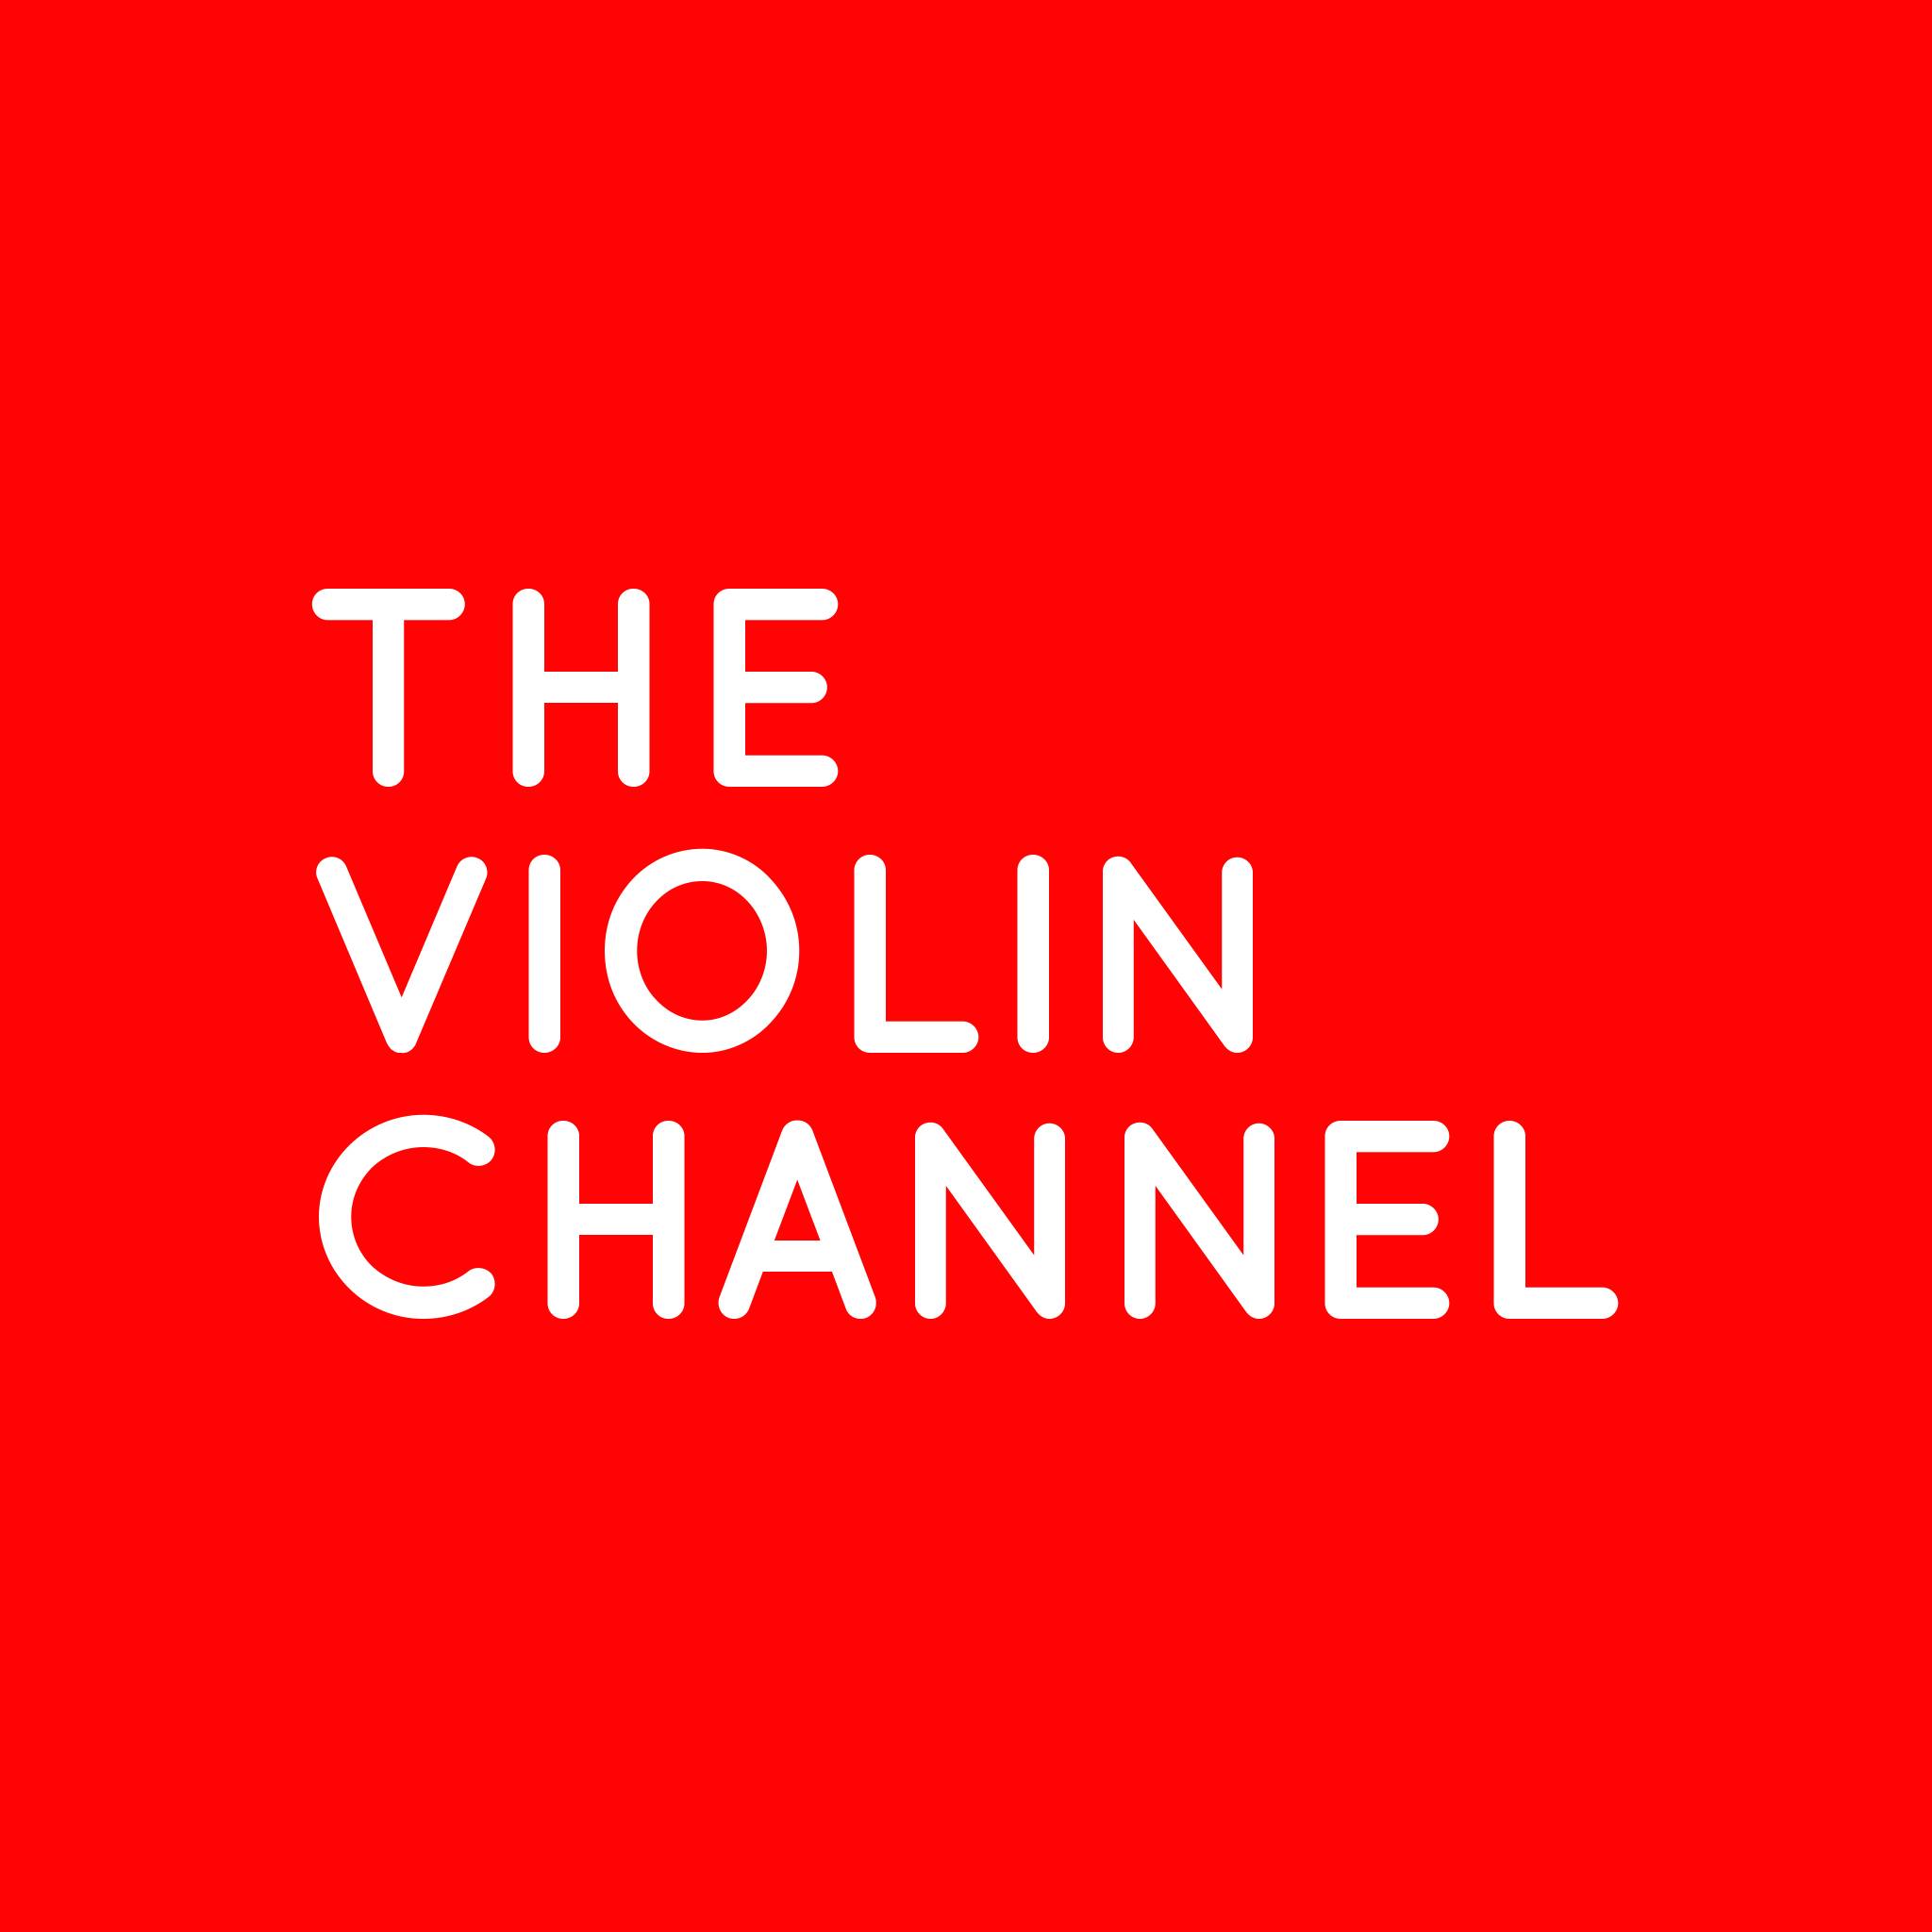 The Violin Channel